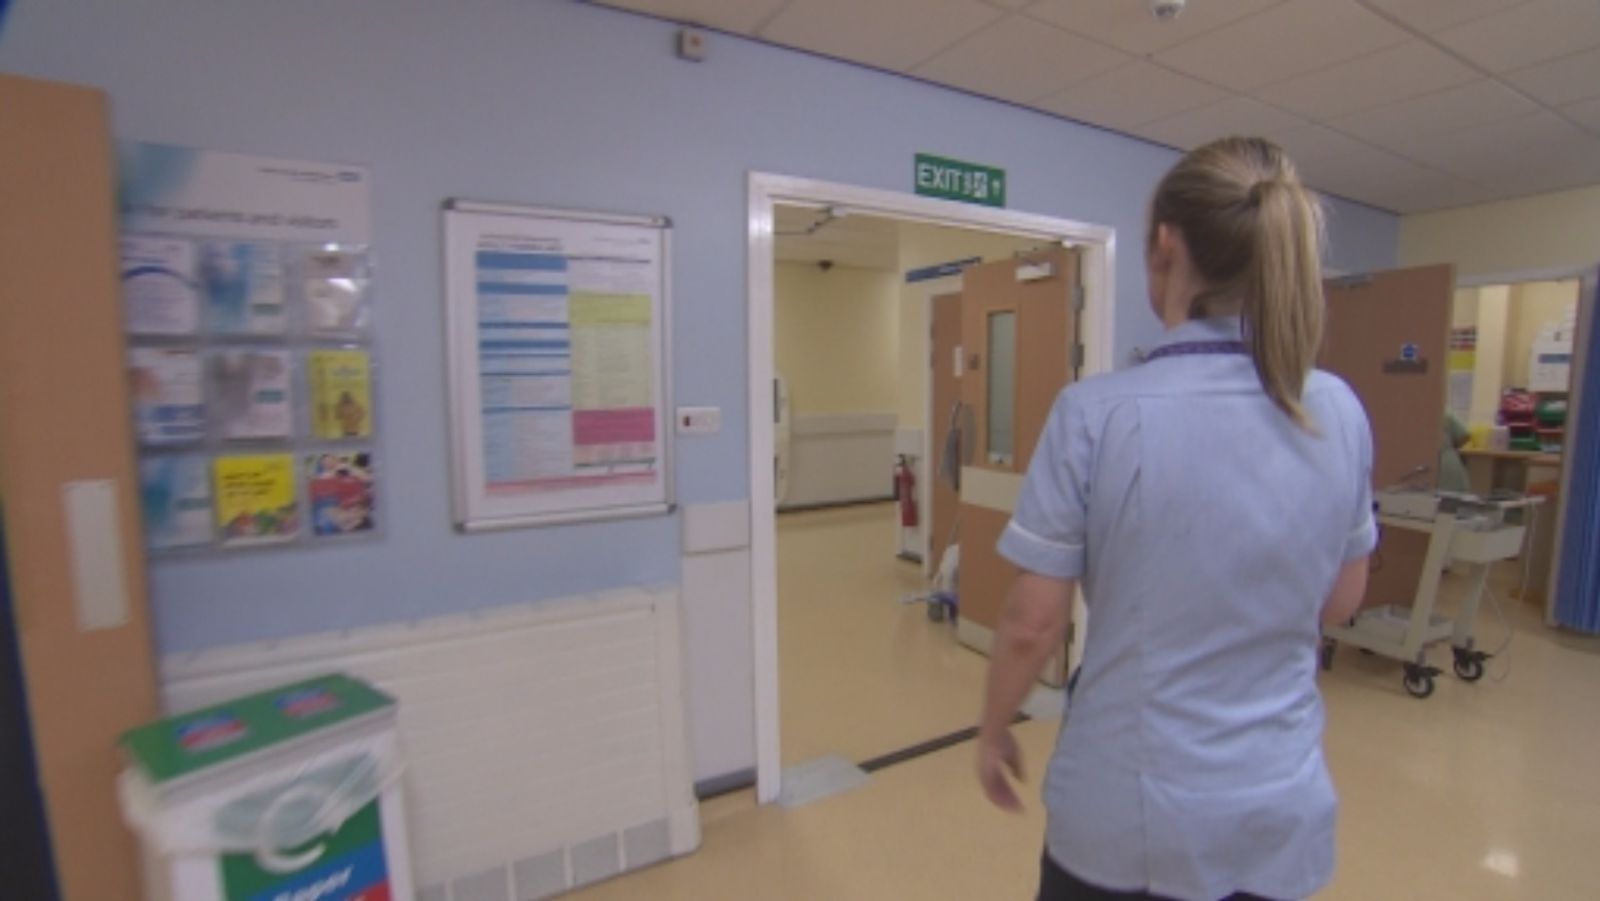 New school of nursing to open in Sunderland | ITV News Tyne Tees